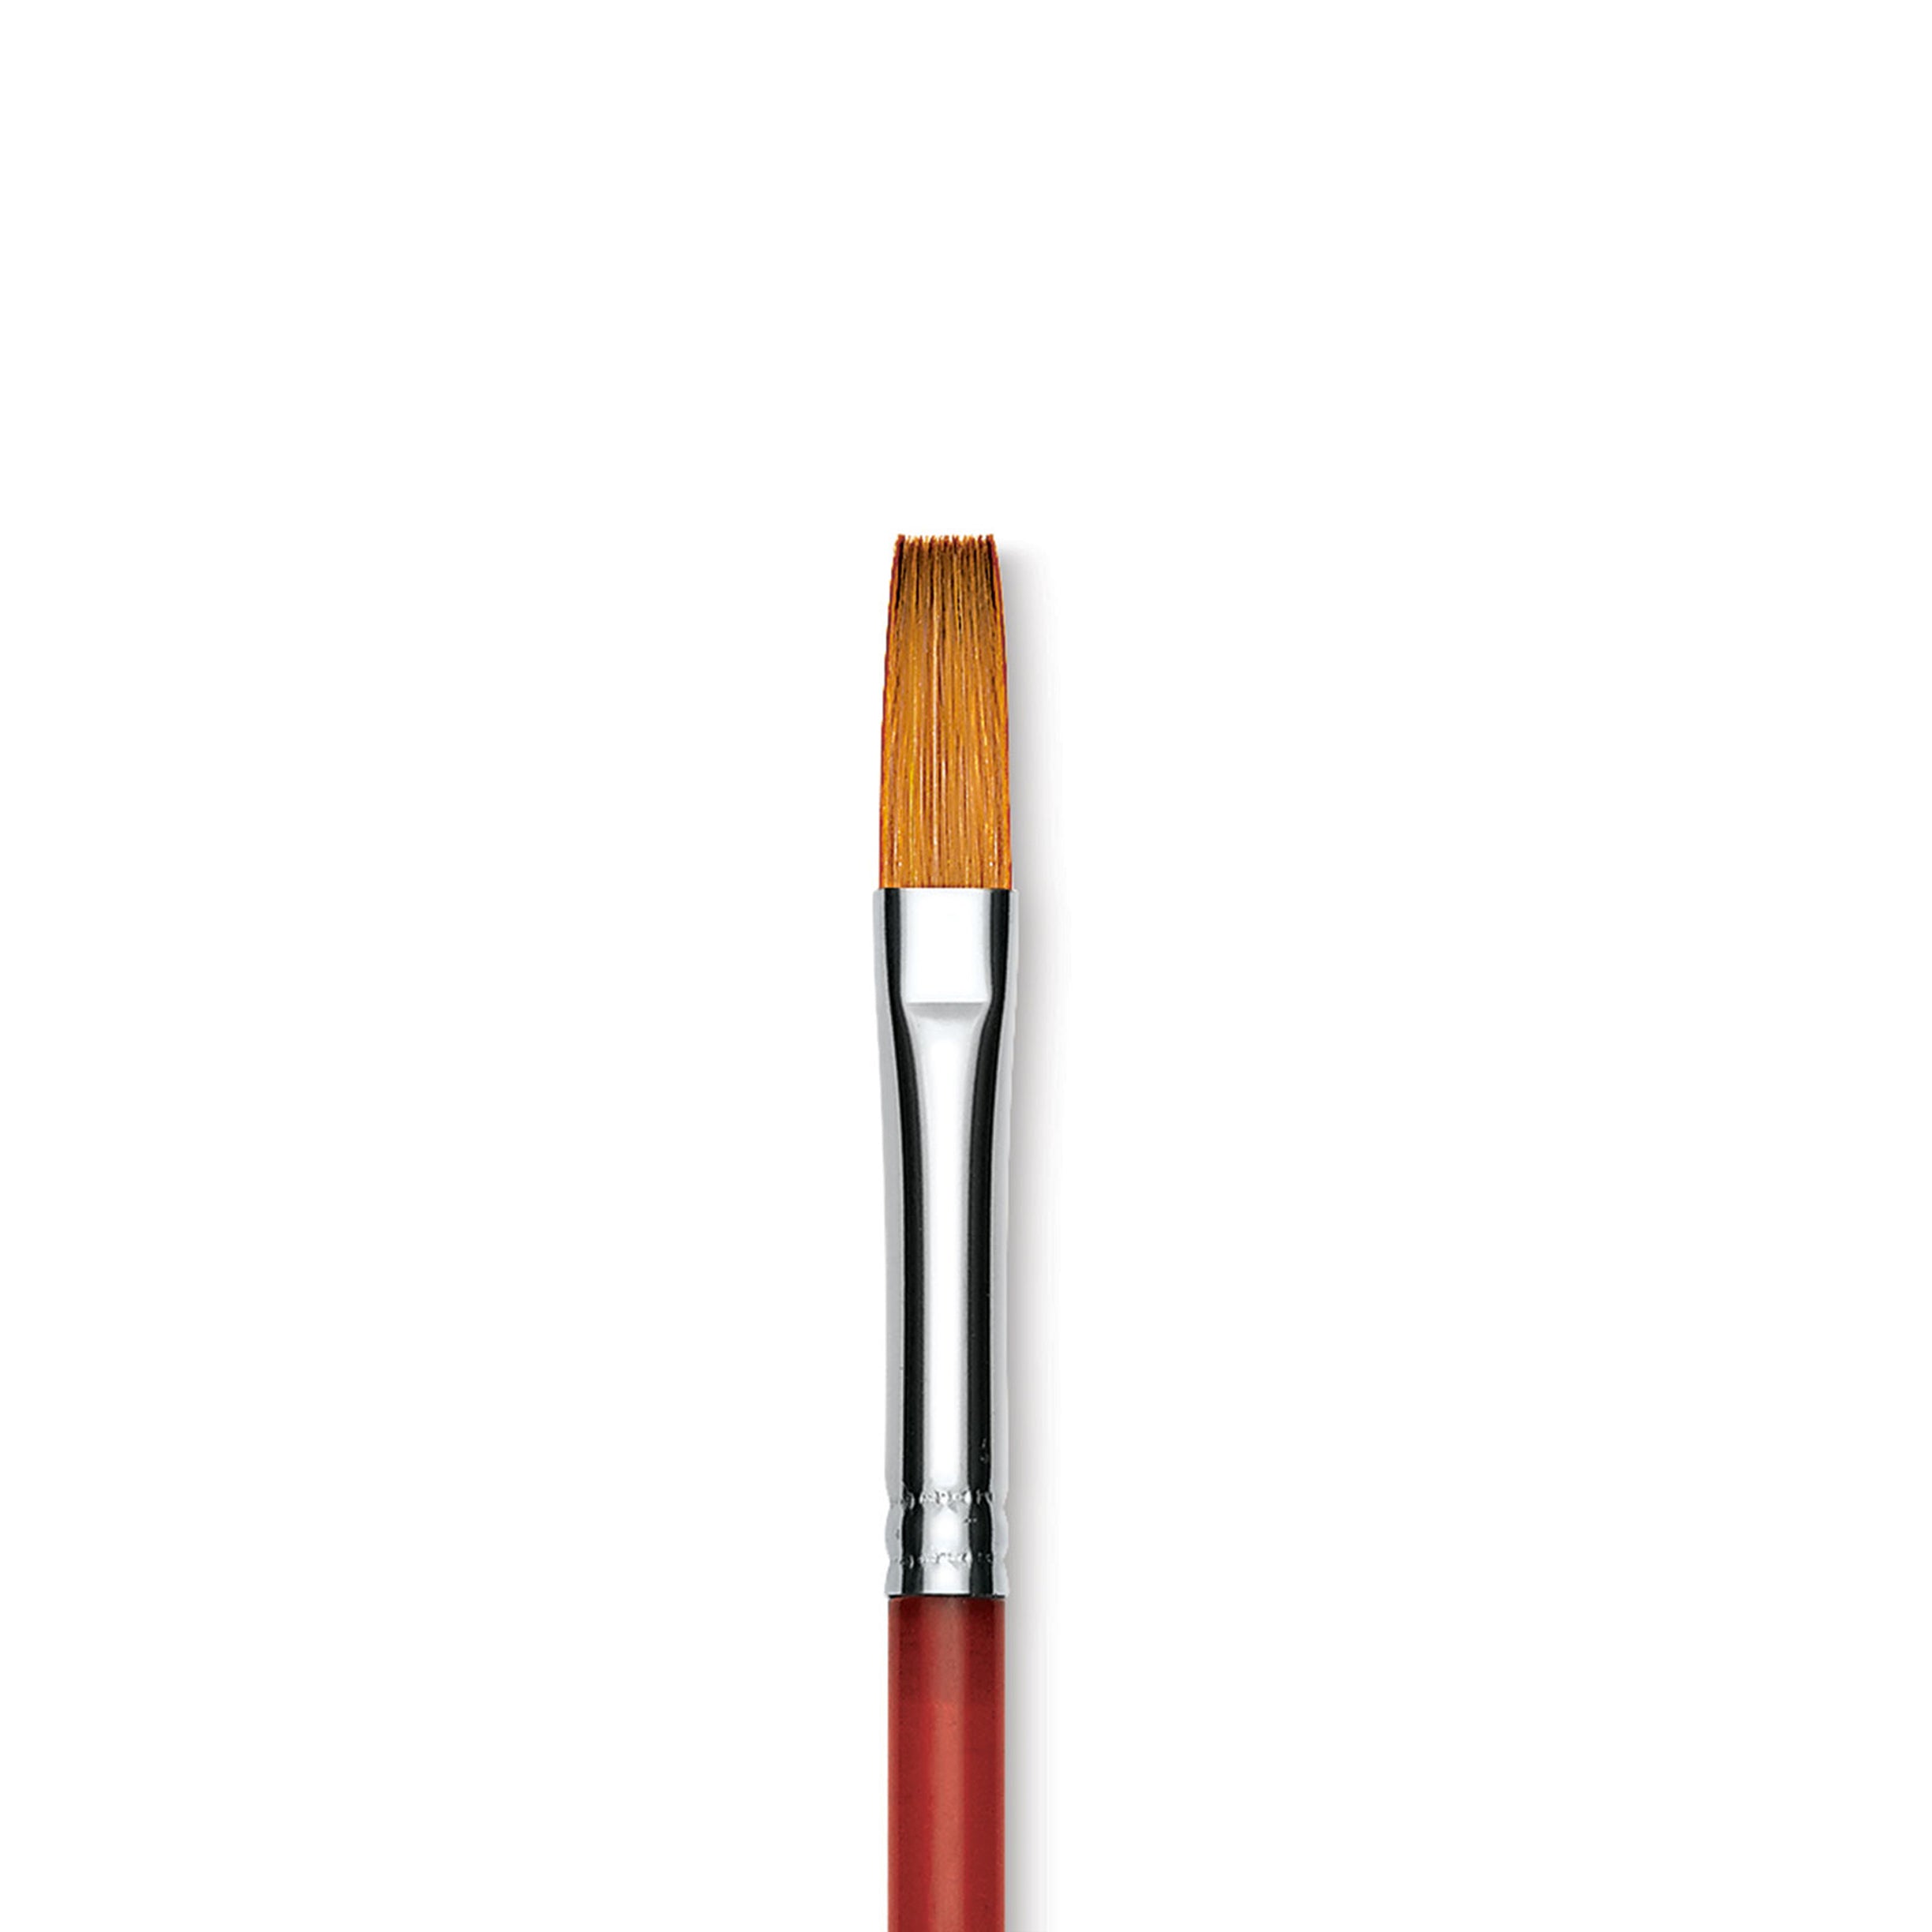 Velvetouch - Series 3950 - Princeton Brush Company